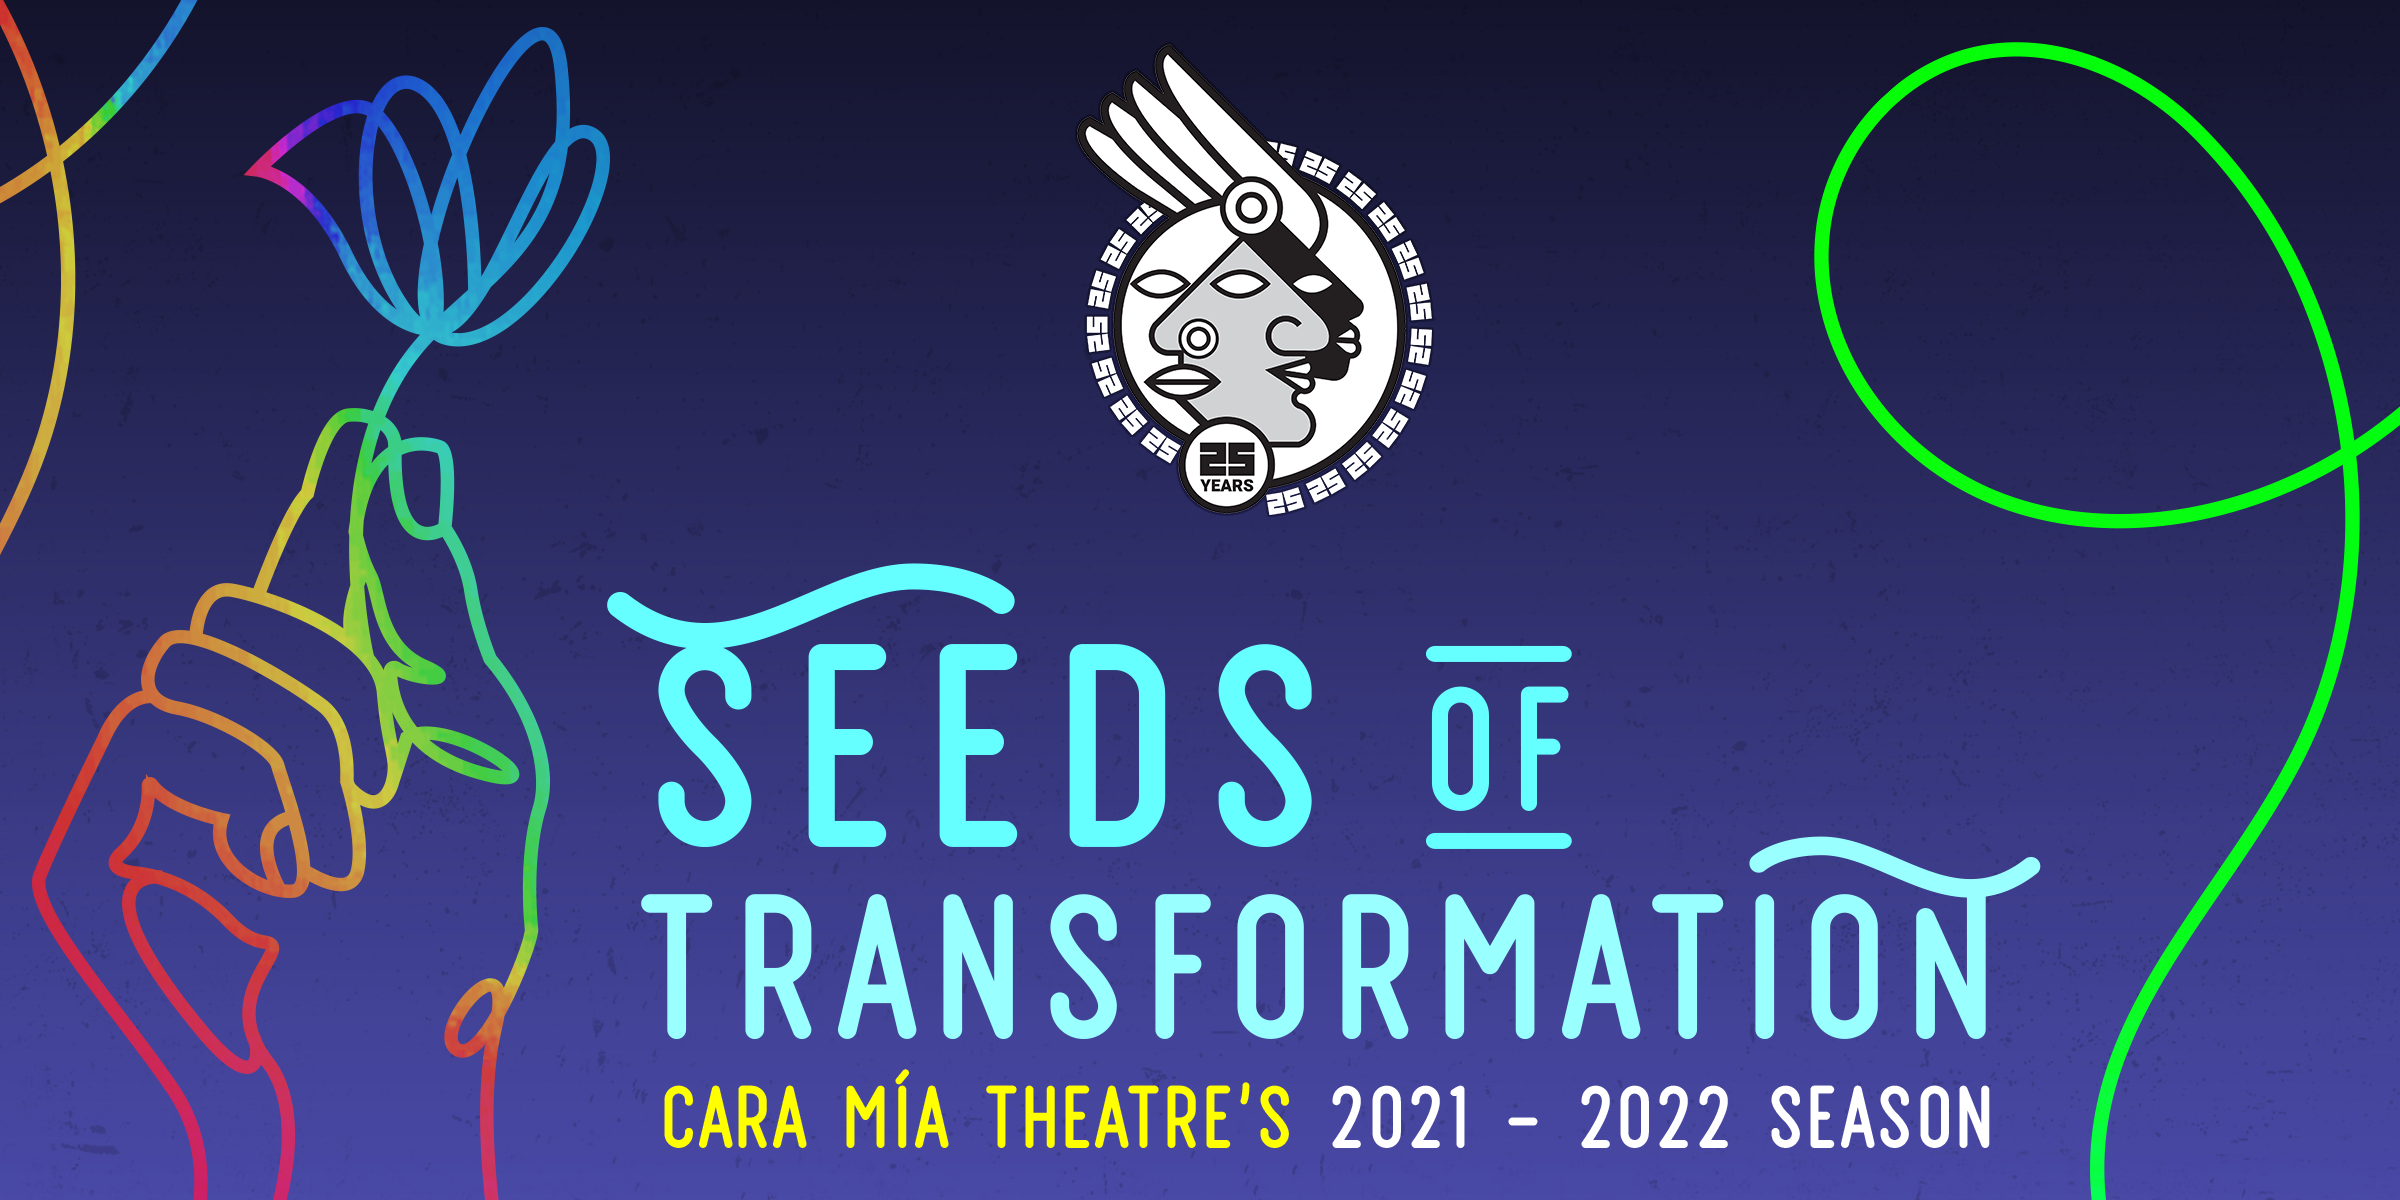 Cara Mía Theatre's 2021-2022 Season Bridges Dallas Artists With Latinx And BIPOC Theatre Leaders And Activists  